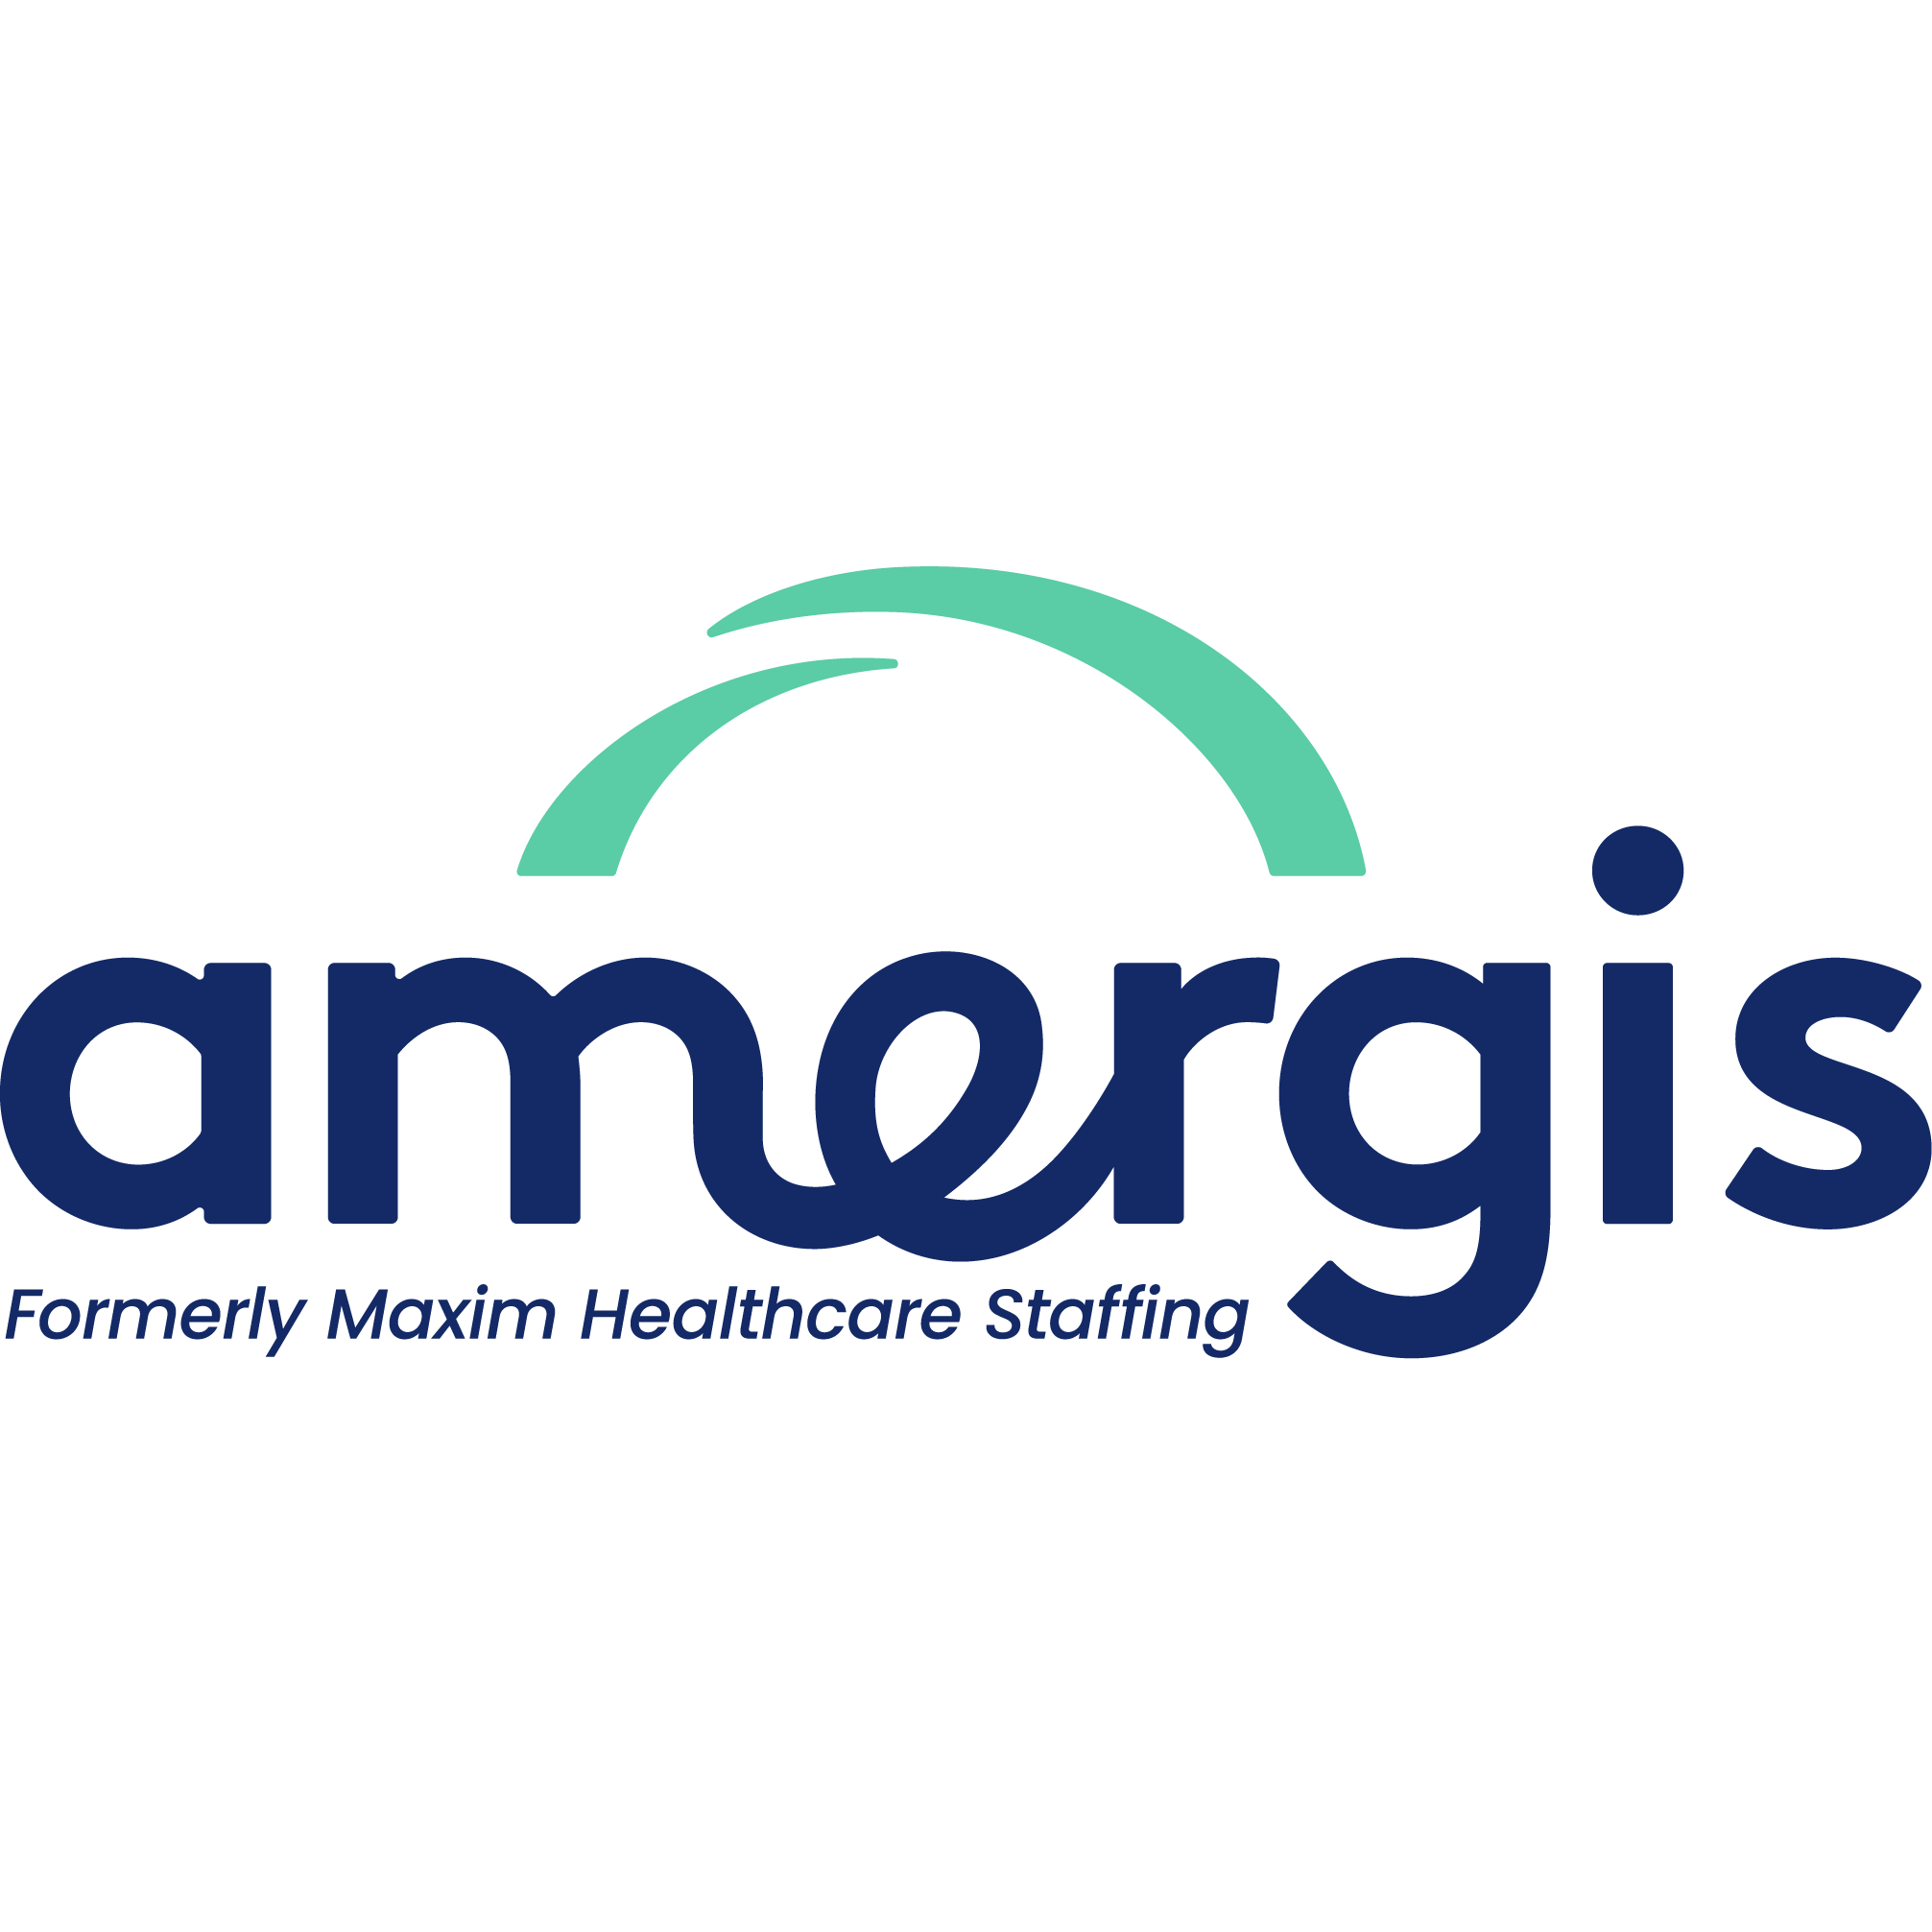 Amergis Formerly Maxim Healthcare Staffing logo Amergis Virginia Beach (757)490-4766